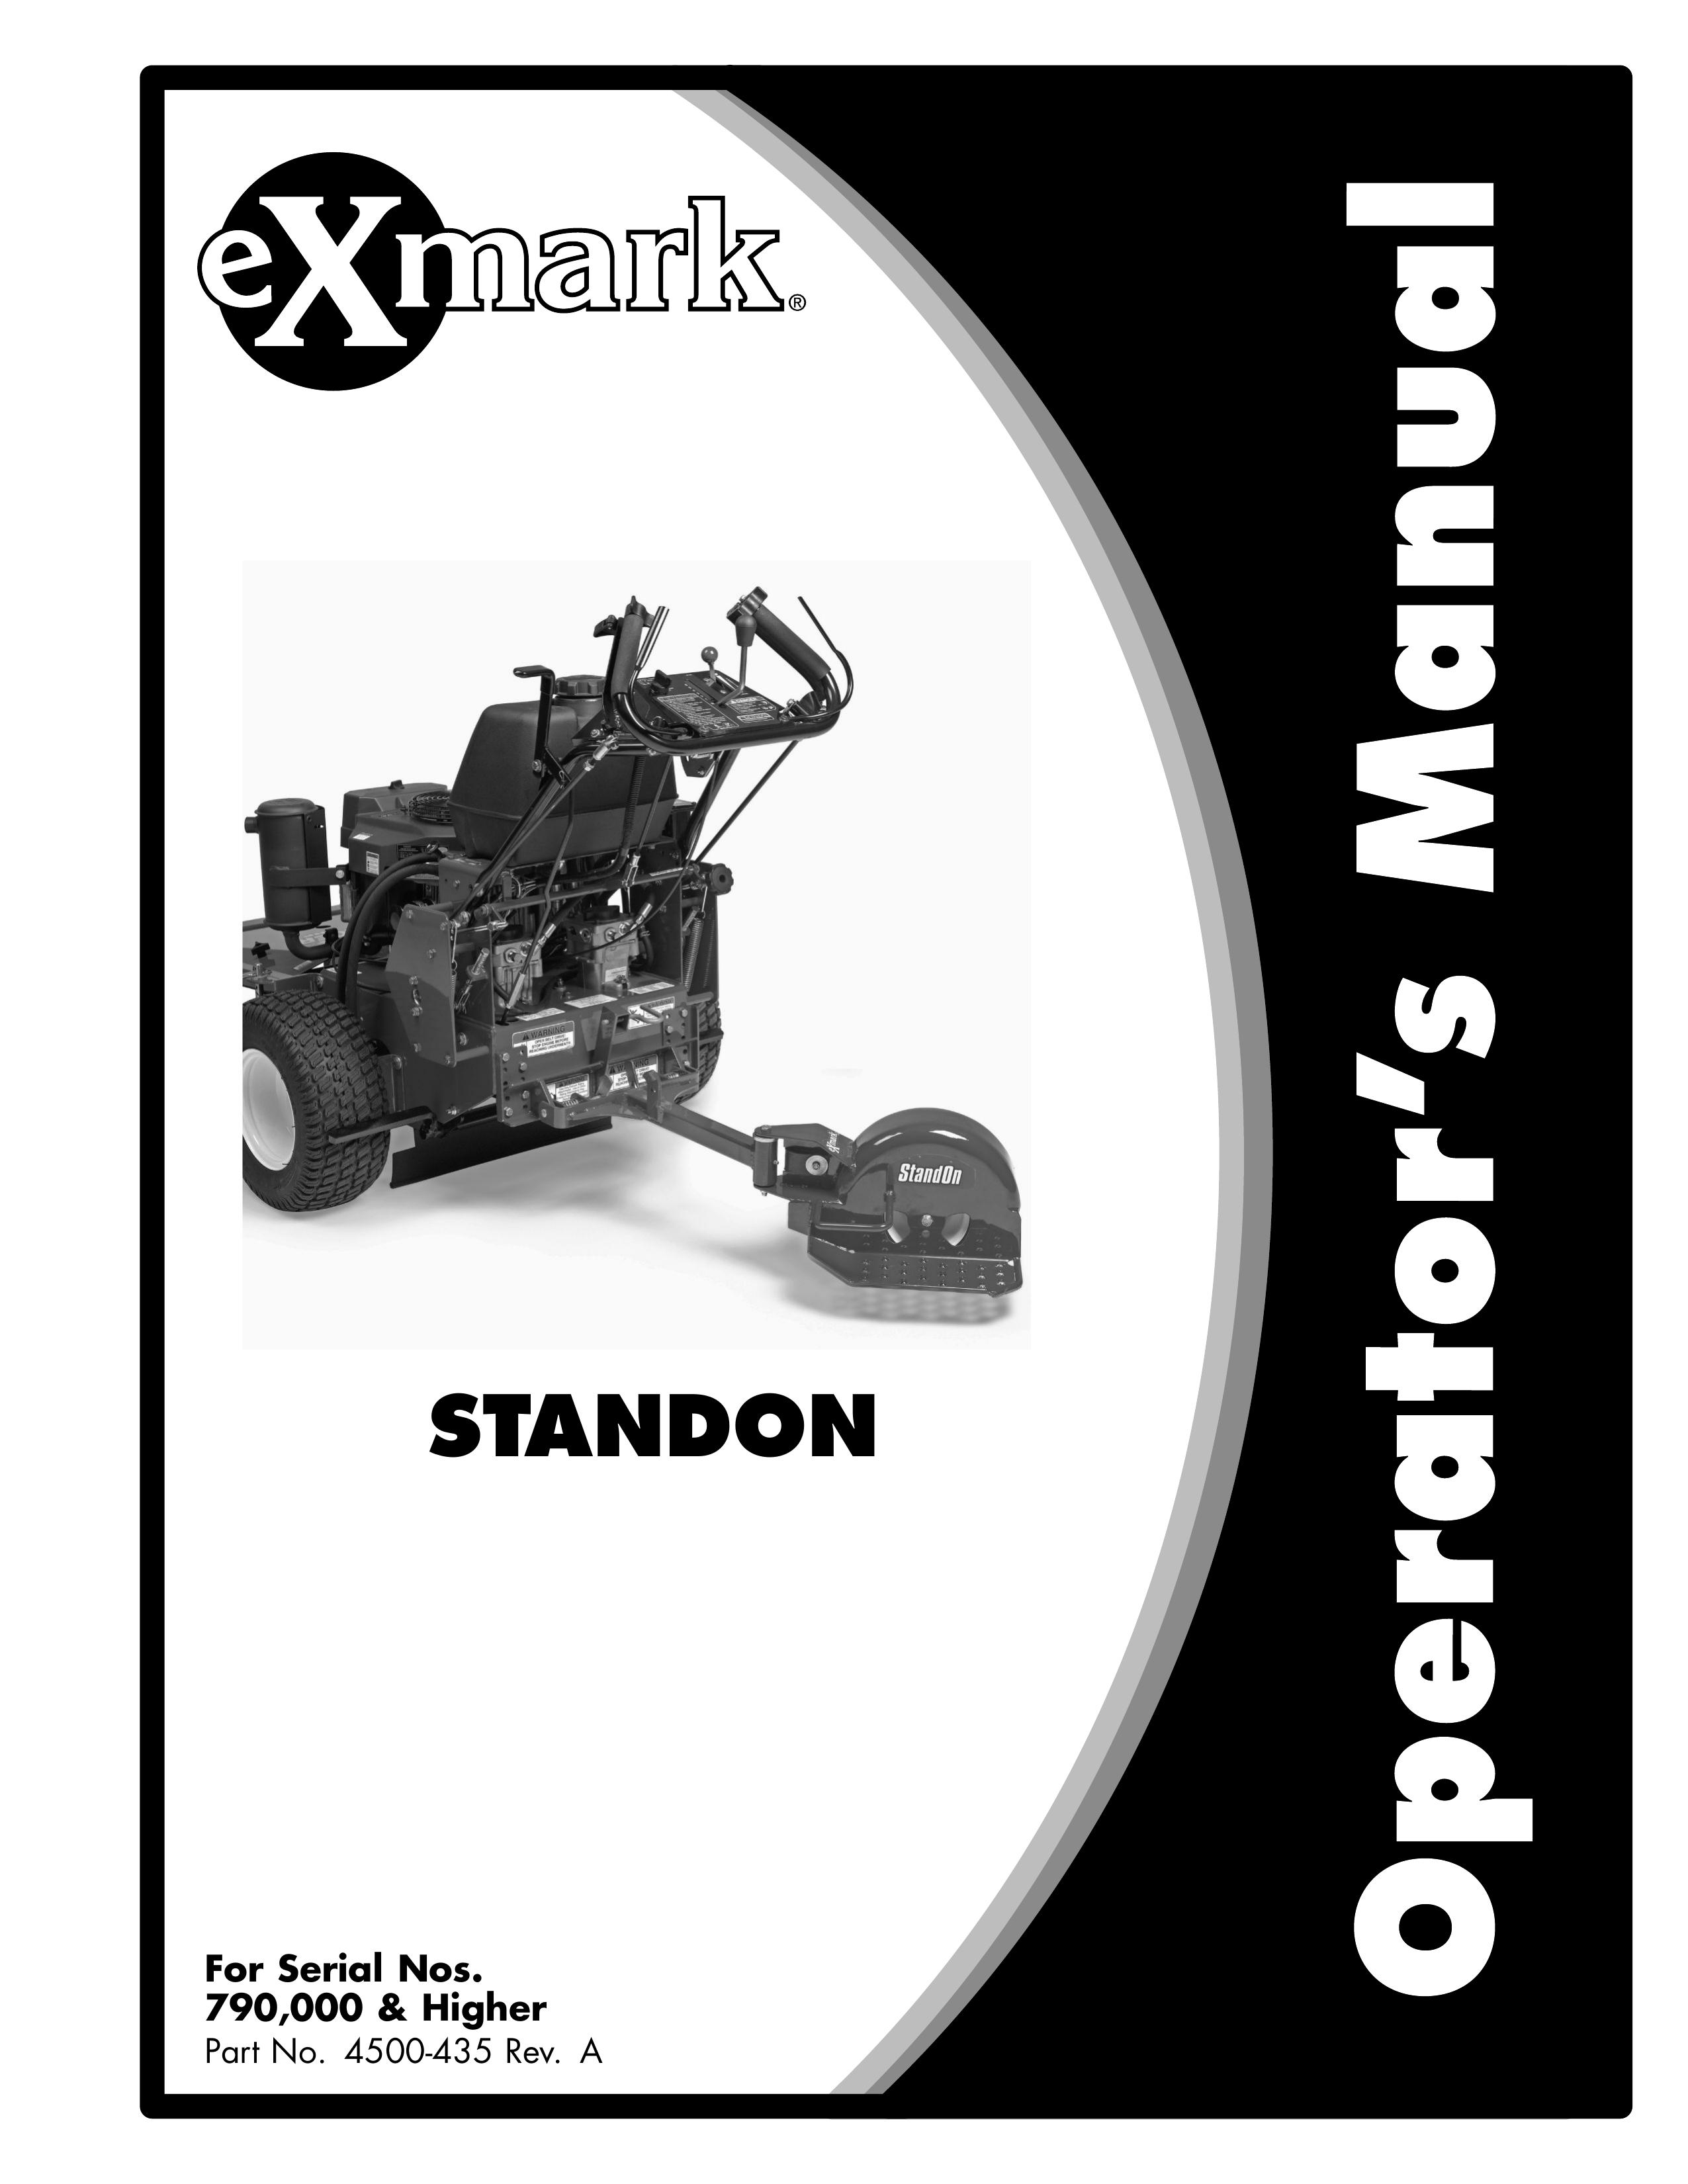 Exmark 4500-435 Lawn Mower User Manual